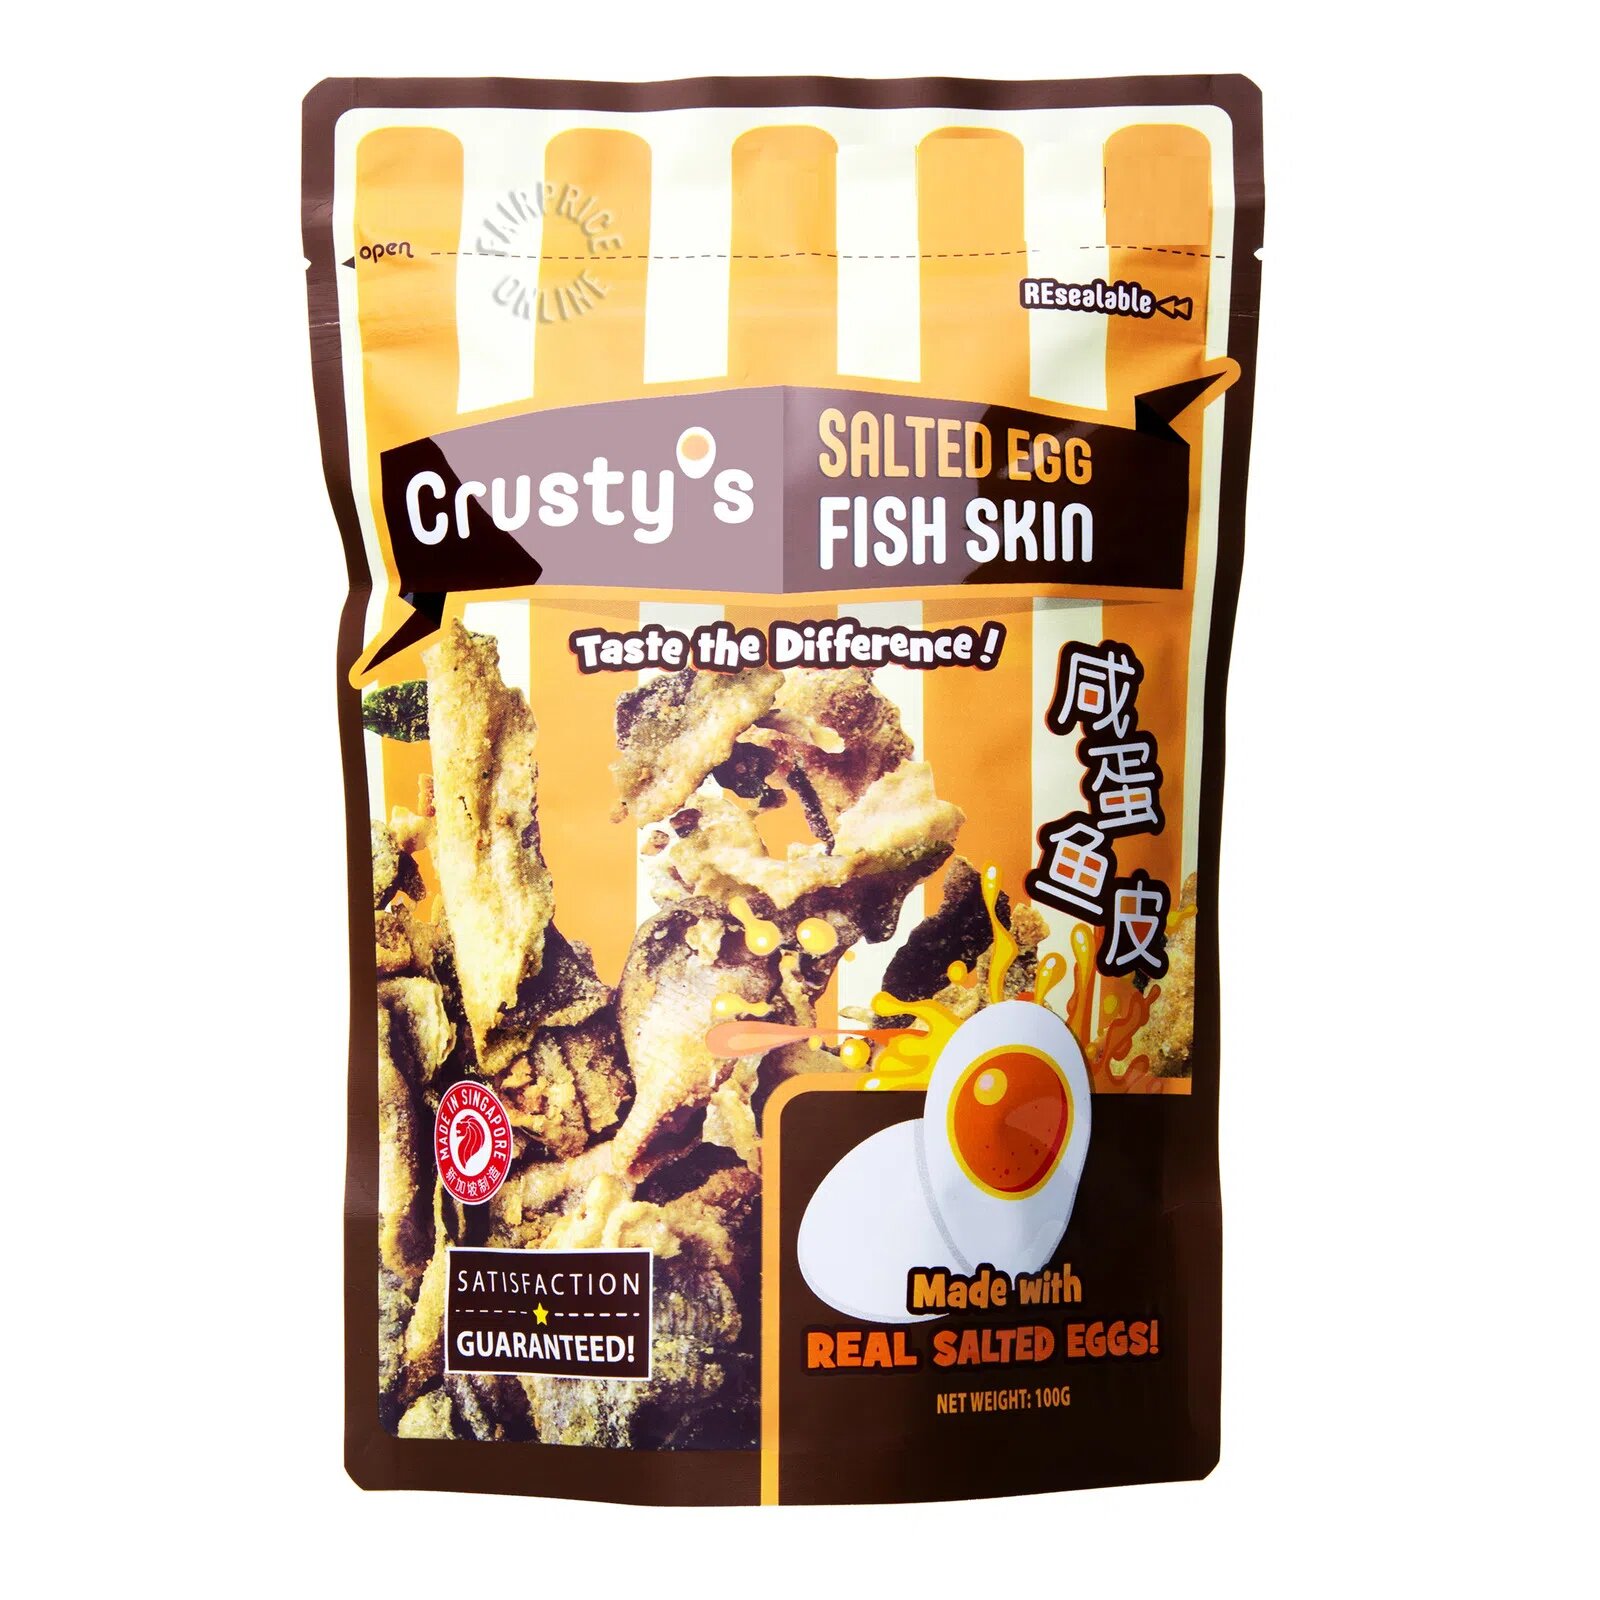 Crusty's Salted Egg Fish Skin